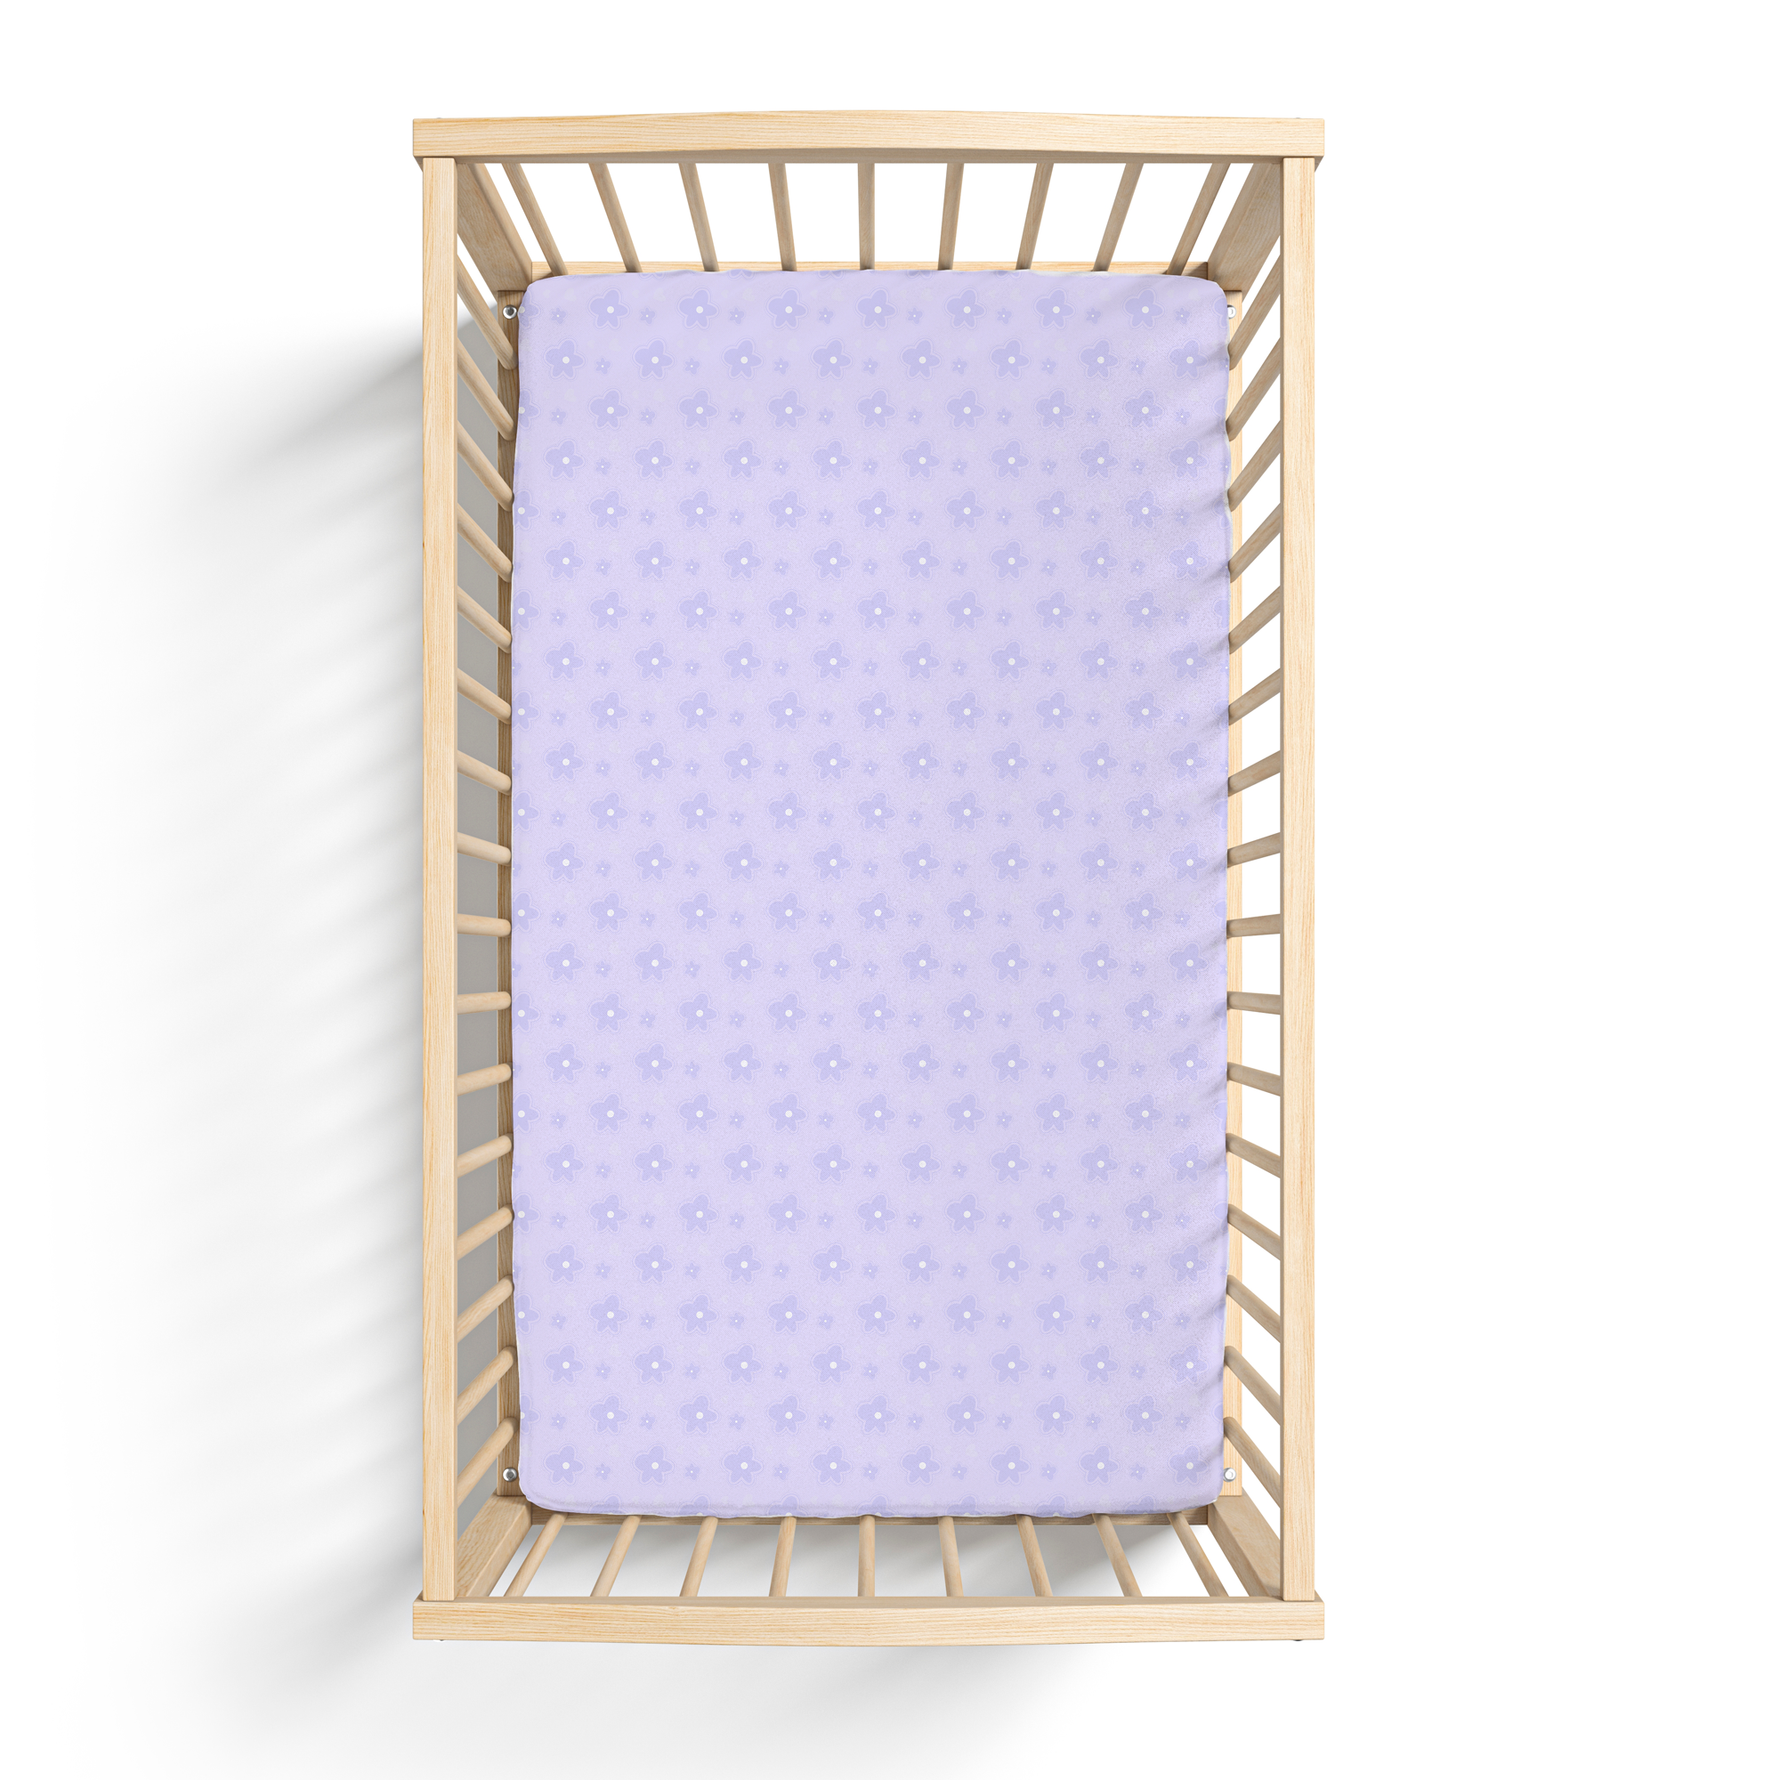 Field of Daisies Crib Sheet - Lindsay Ann Artistry